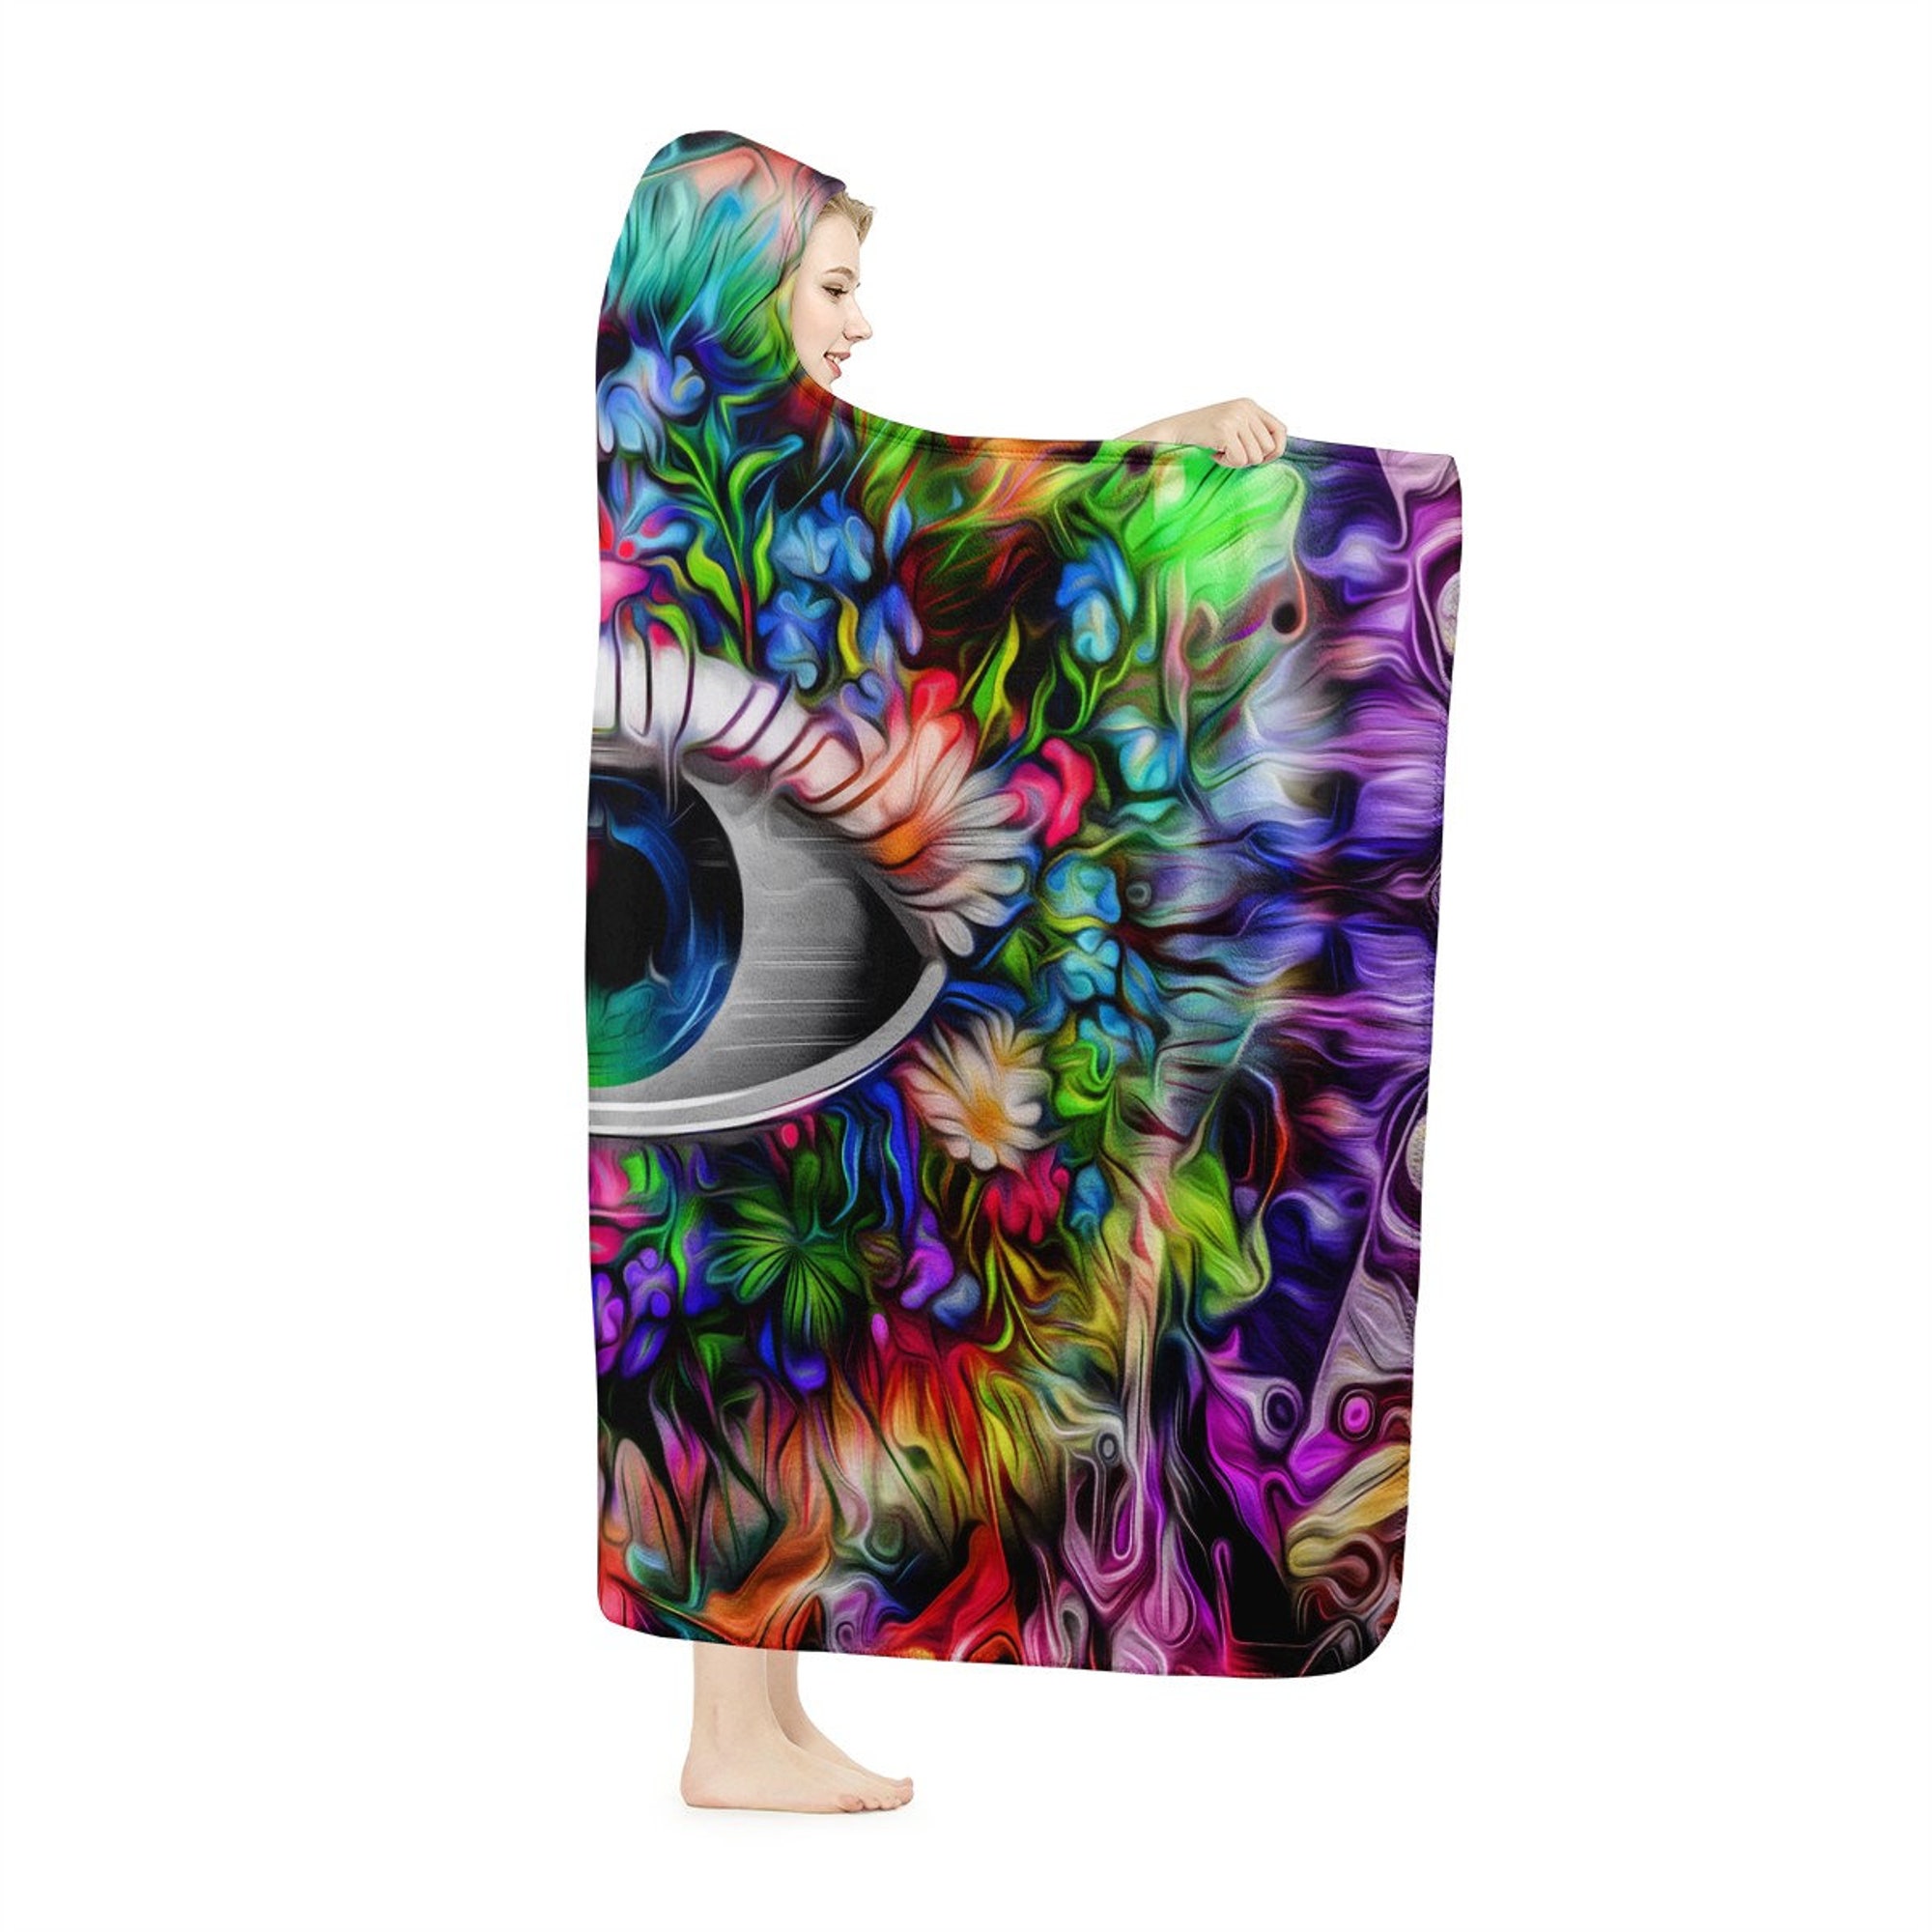 Colorful Magical Eye Hooded Blanket